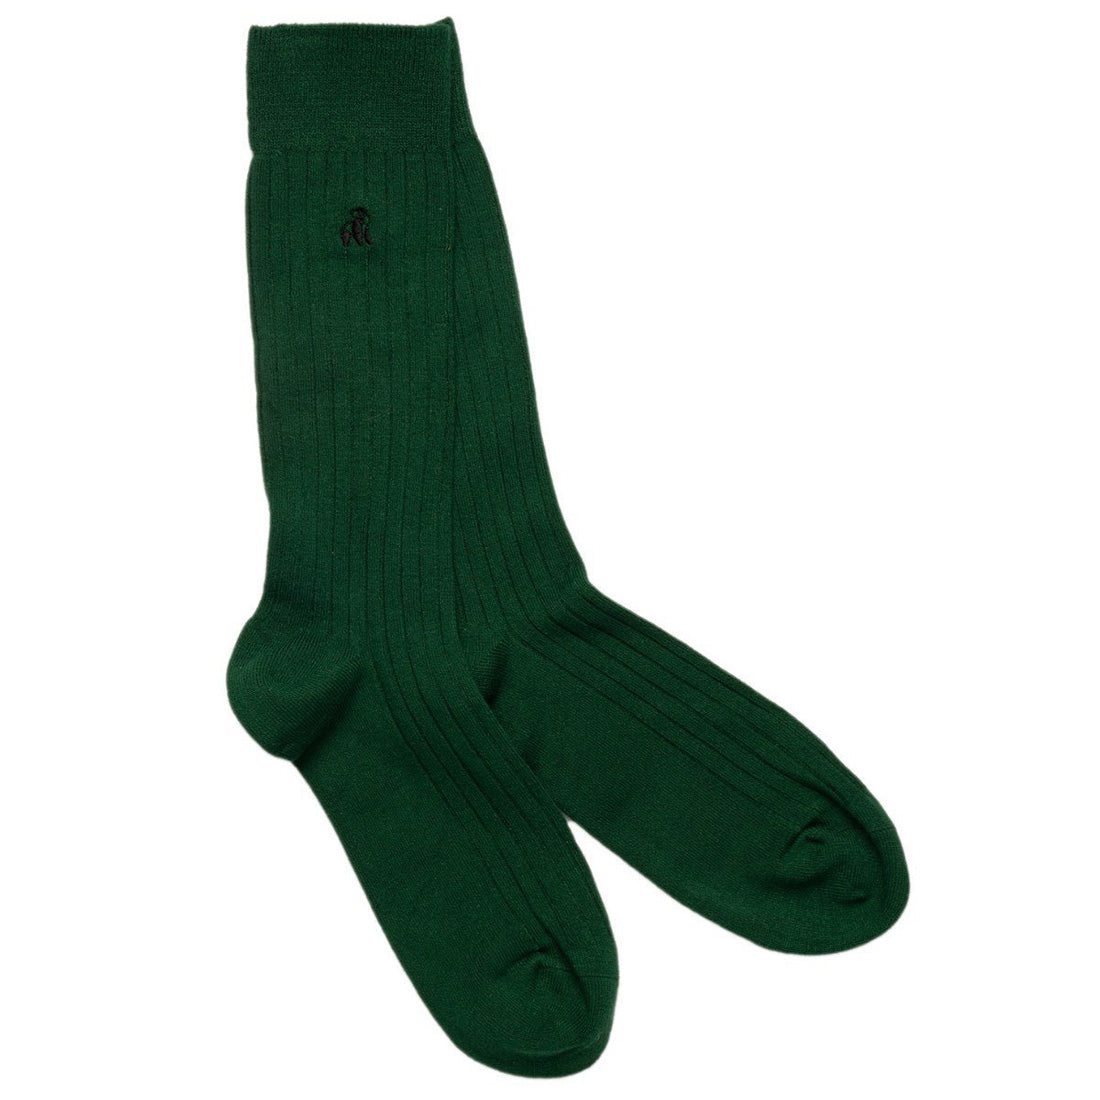 socks-racing-green-bamboo-socks-1_c9c88dee-afce-4e20-8a9c-84027a27a06b.jpg